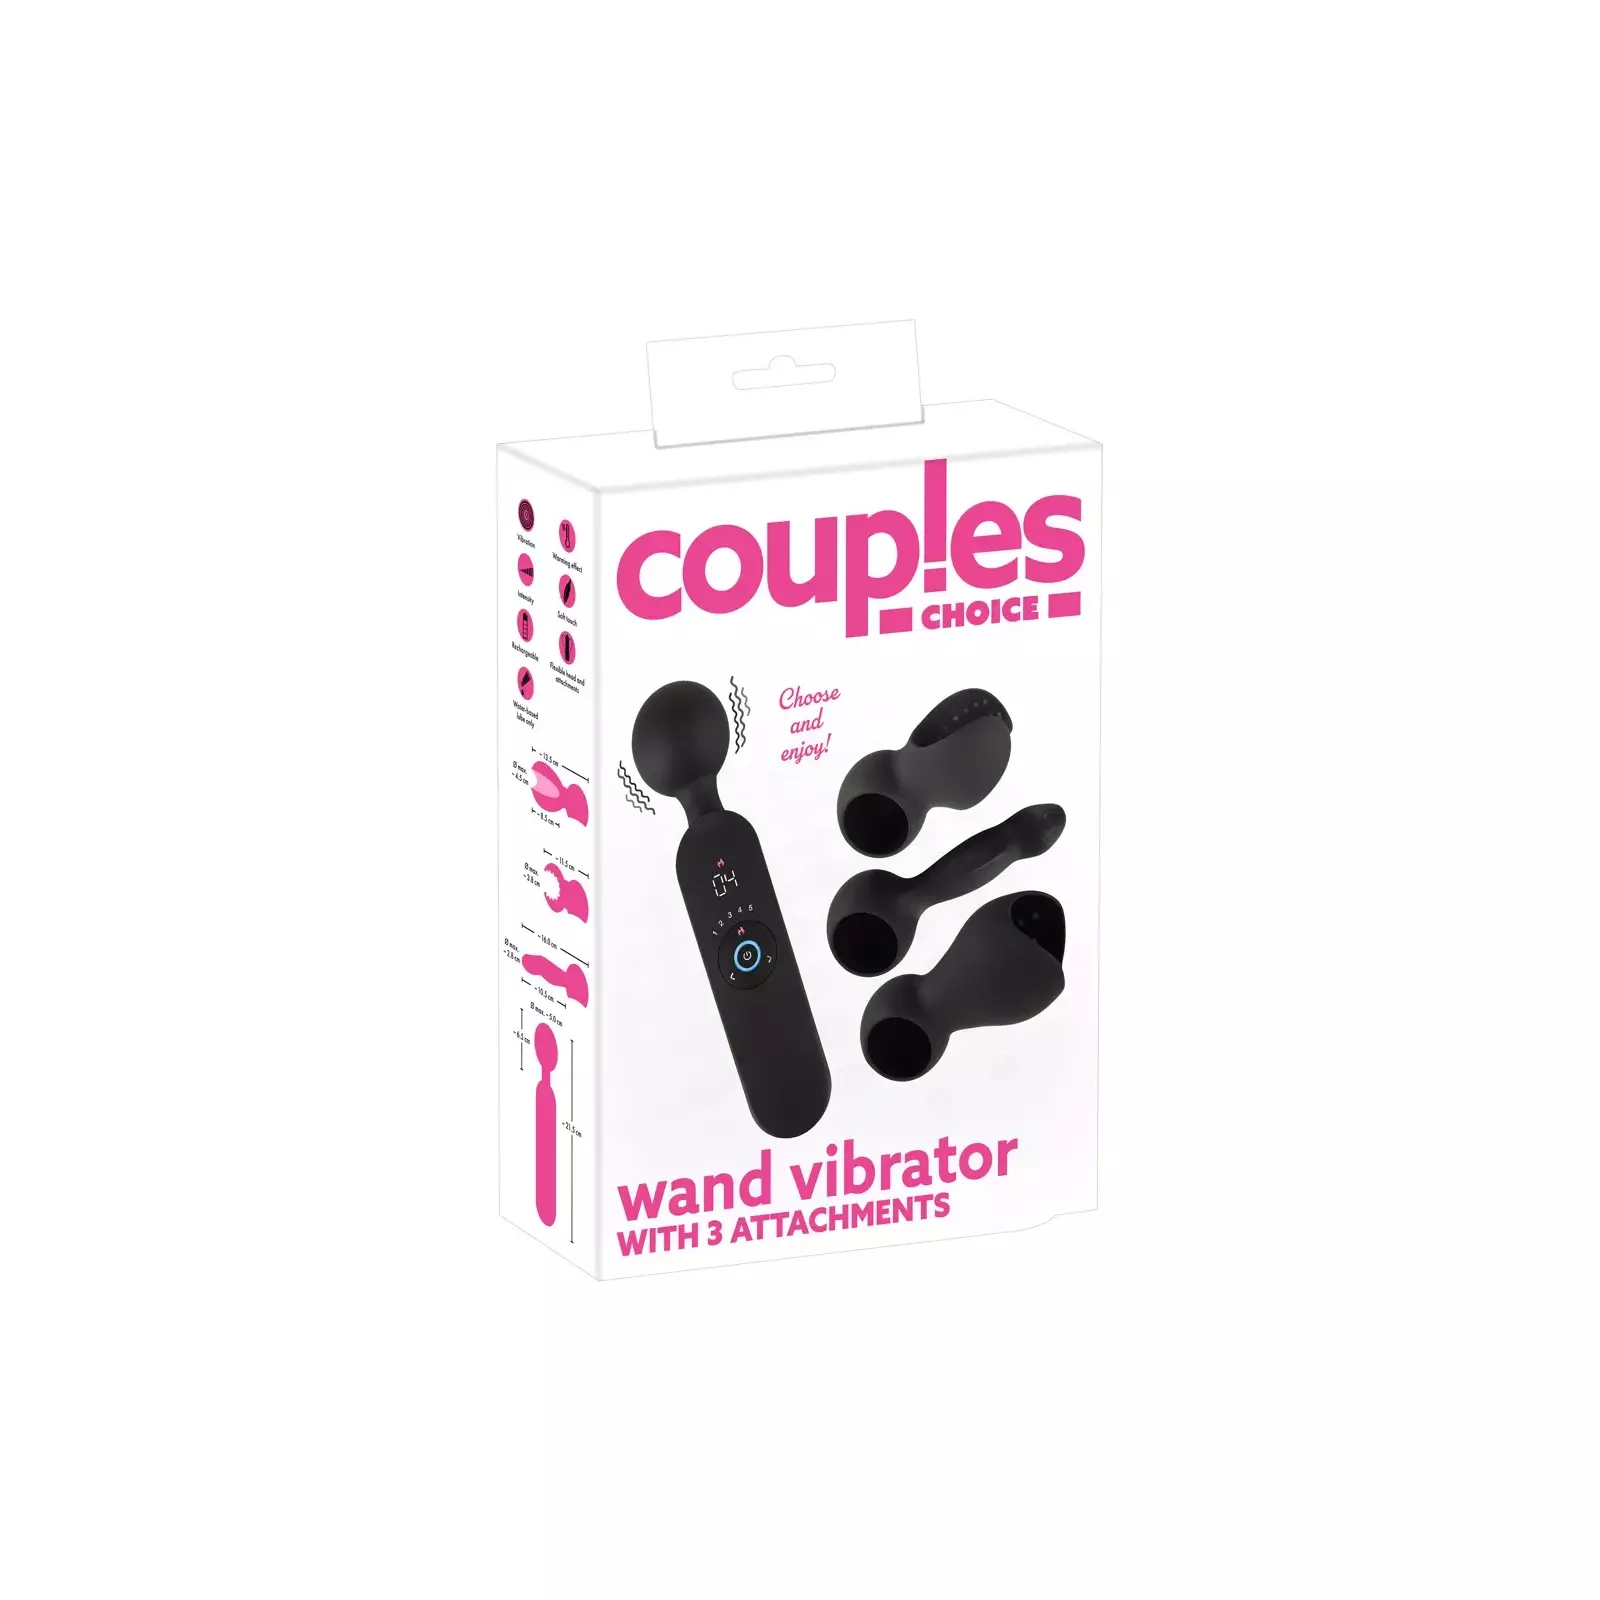 couples choice 05556140000 Photo 1